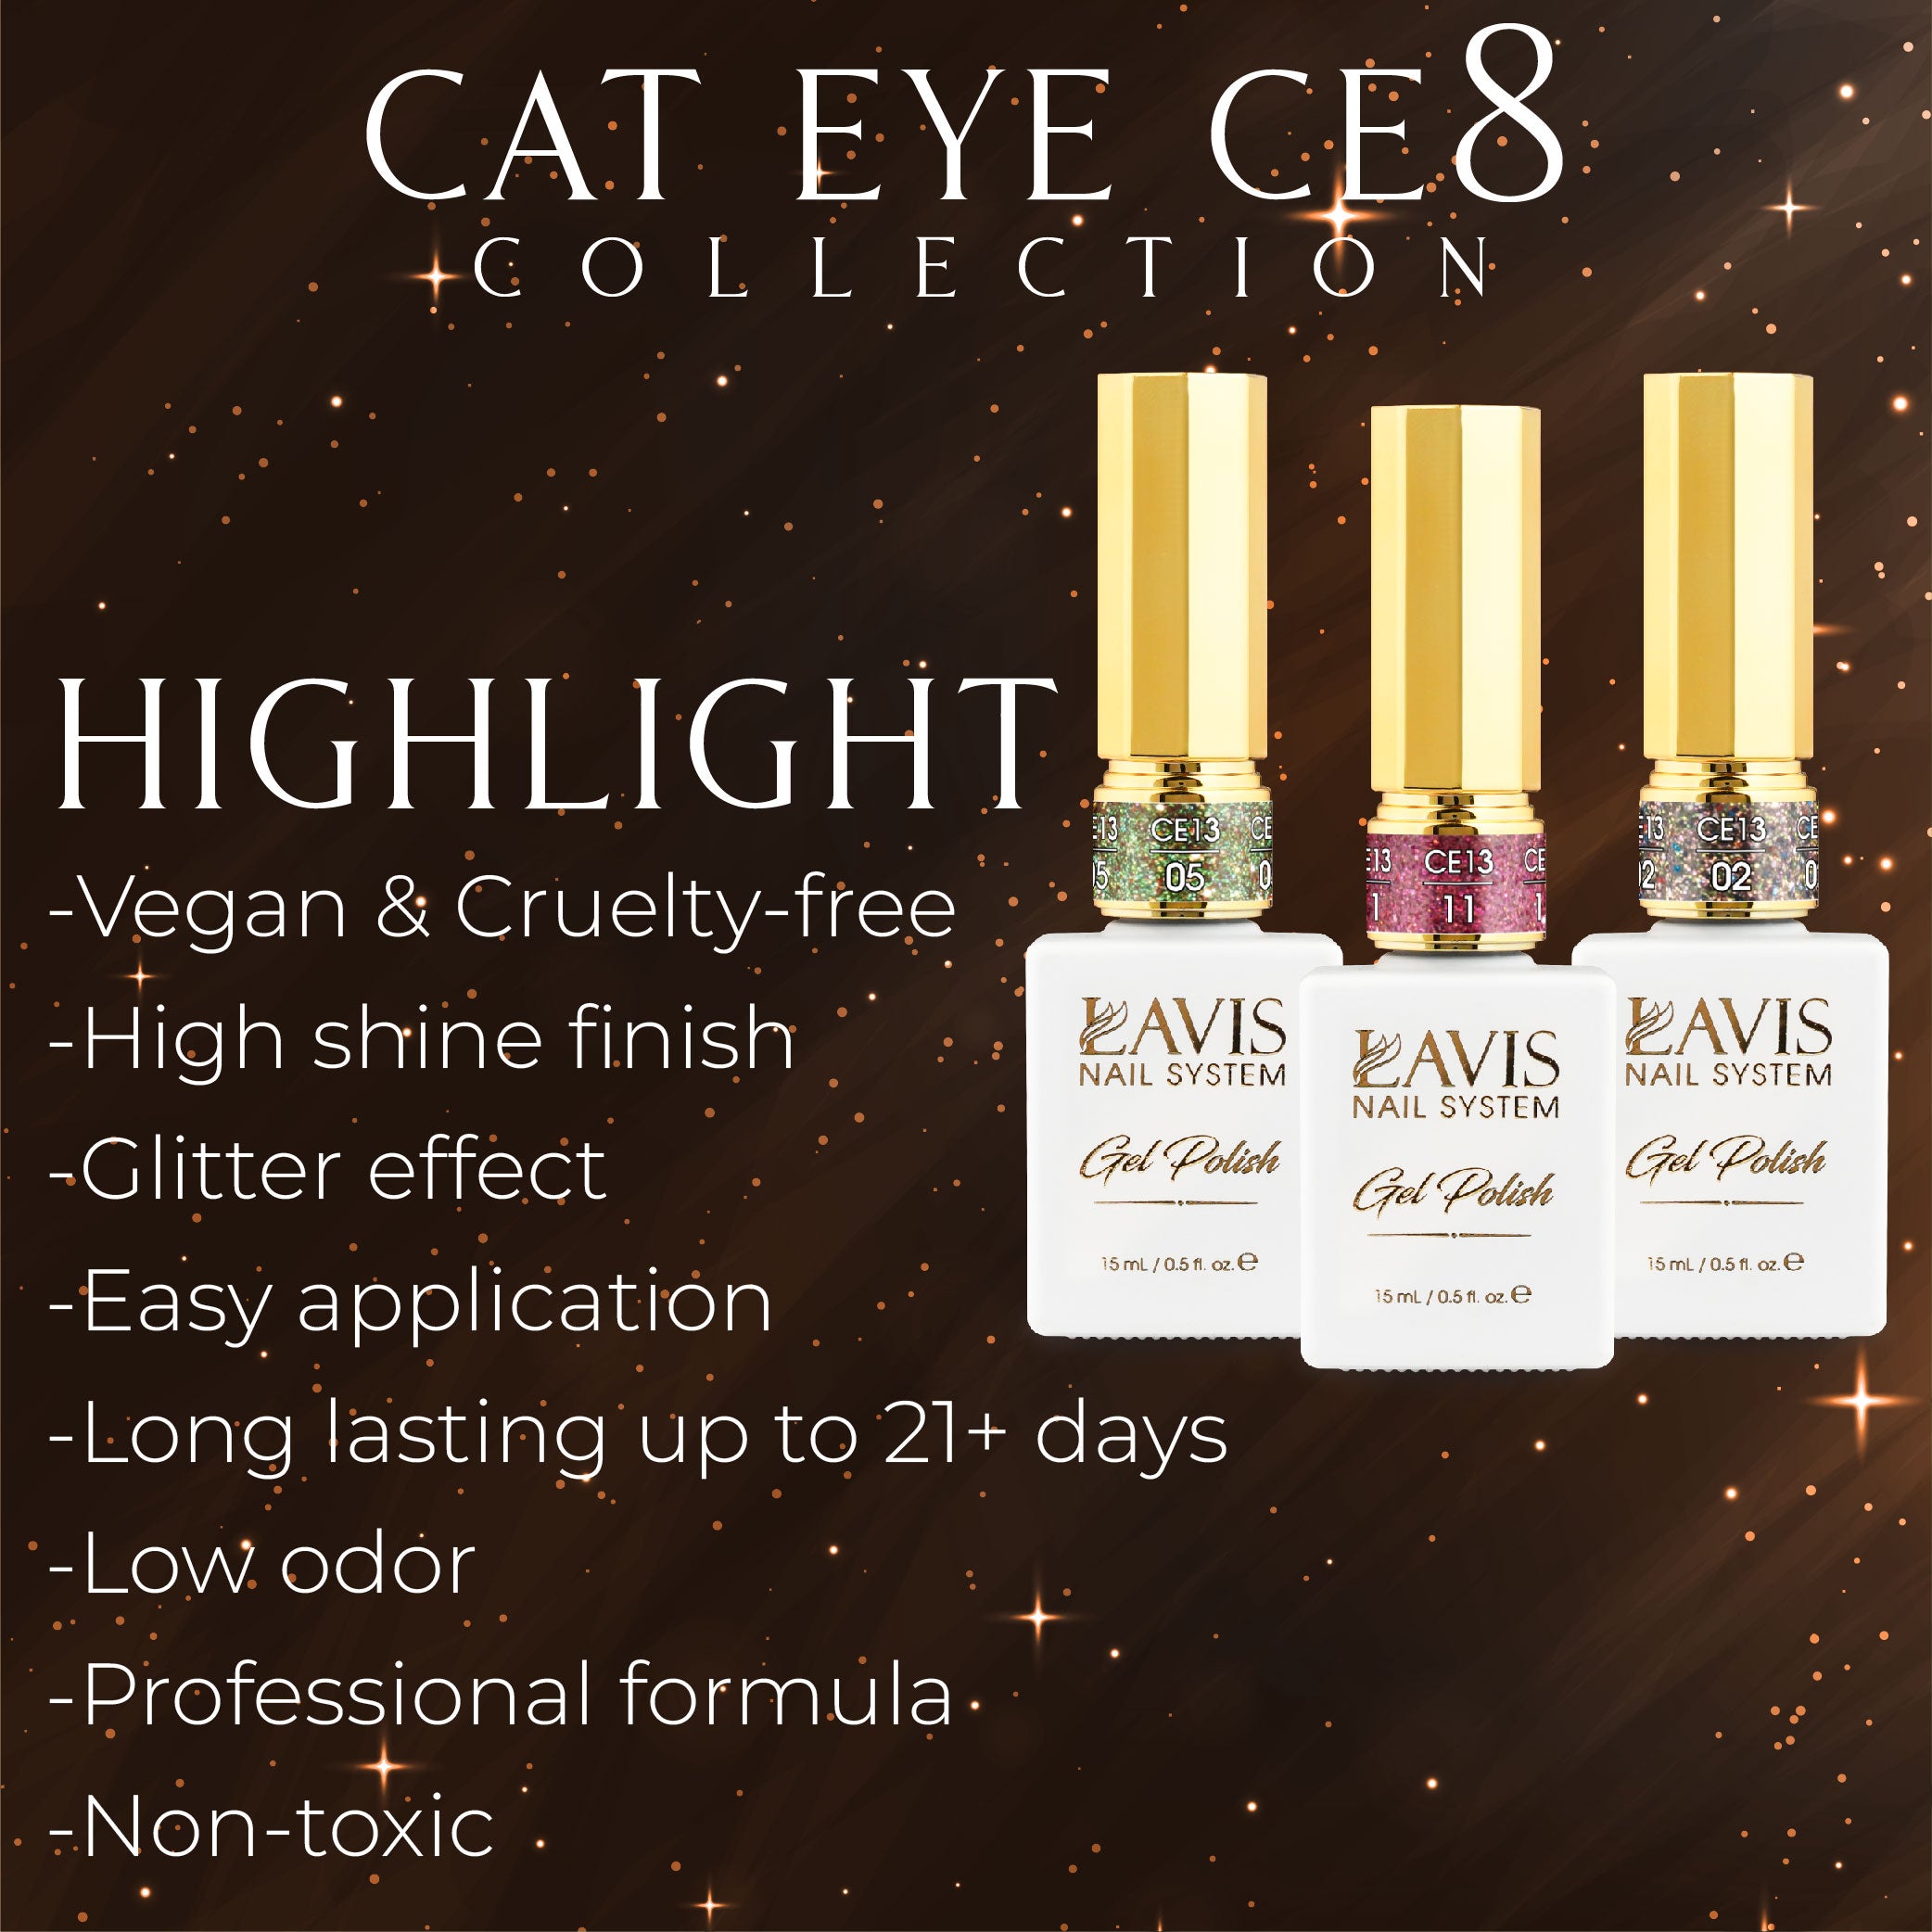 LAVIS Cat Eyes CE8 - 05 - Gel Polish 0.5 oz - Lavis Hidden Treasures Collection